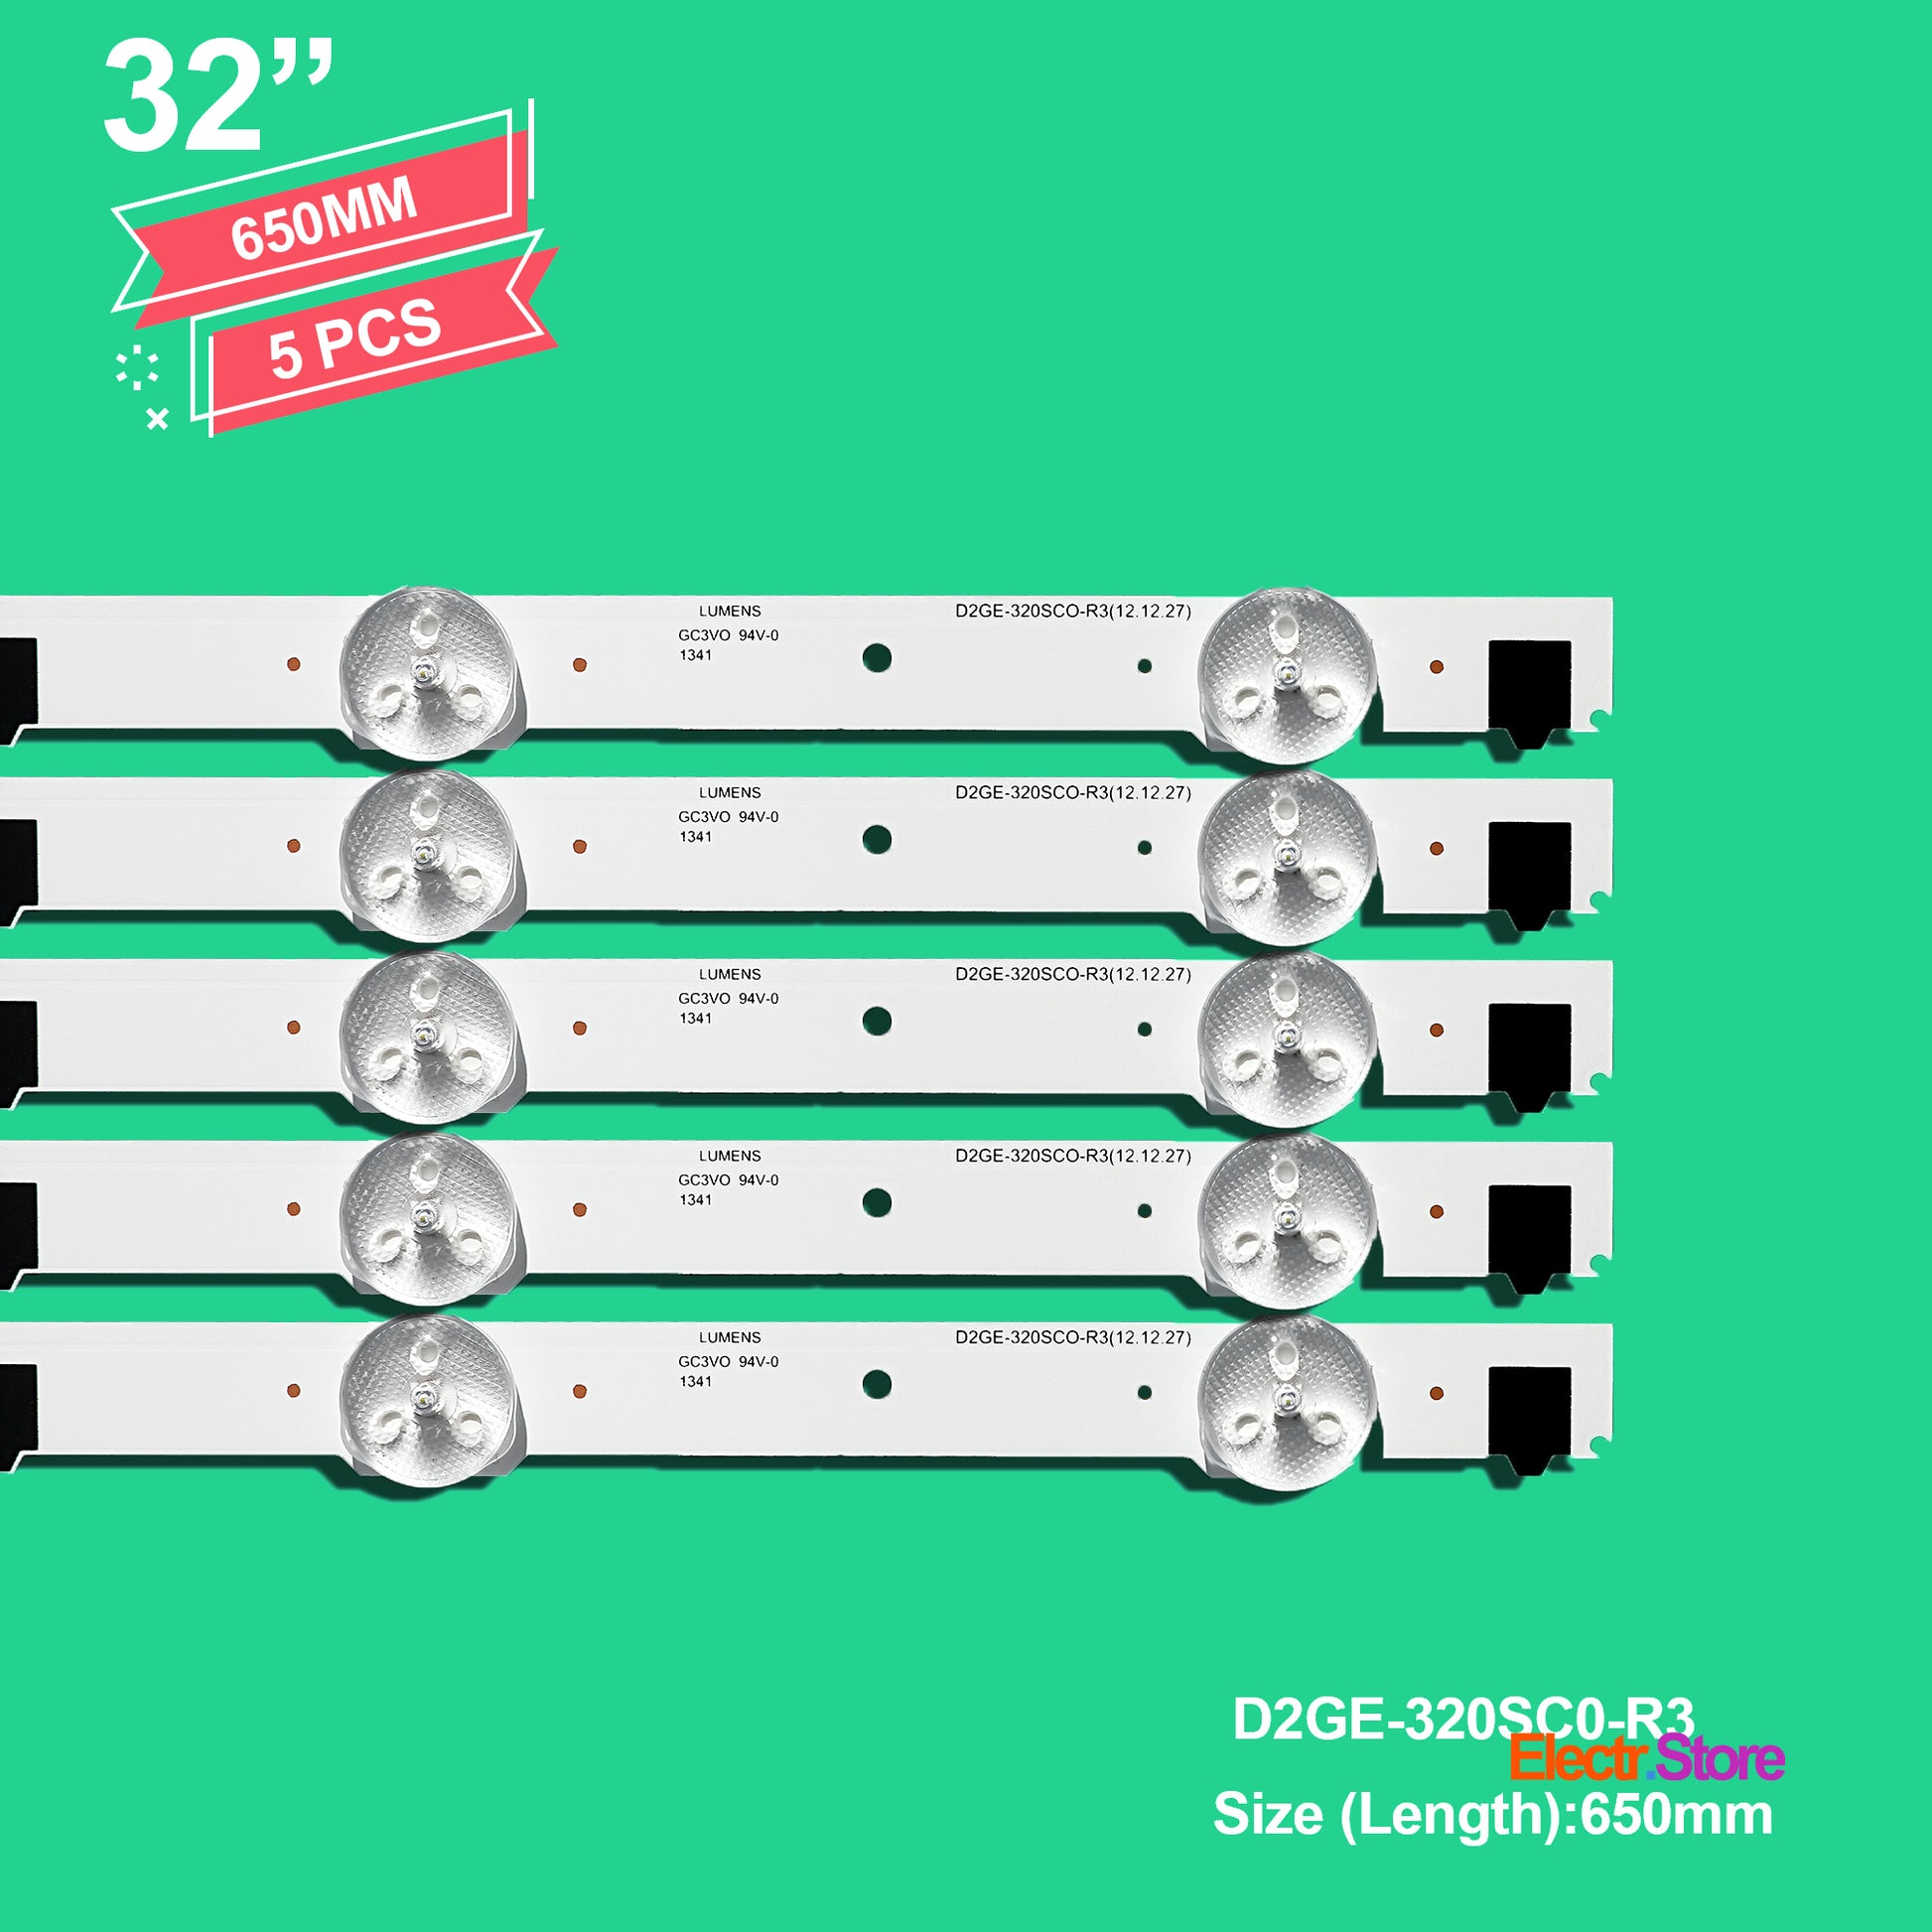 LED Backlight Strip Kits, 2013SVS32F, 2013SVS32H, BN96-28489A, BN96-25300A, BN96-25299A, D2GE-320SC0-R3 (5 pcs/kit), for TV 32" 32" D2GE-320SC0-R3 LED Backlights Samsung Electr.Store